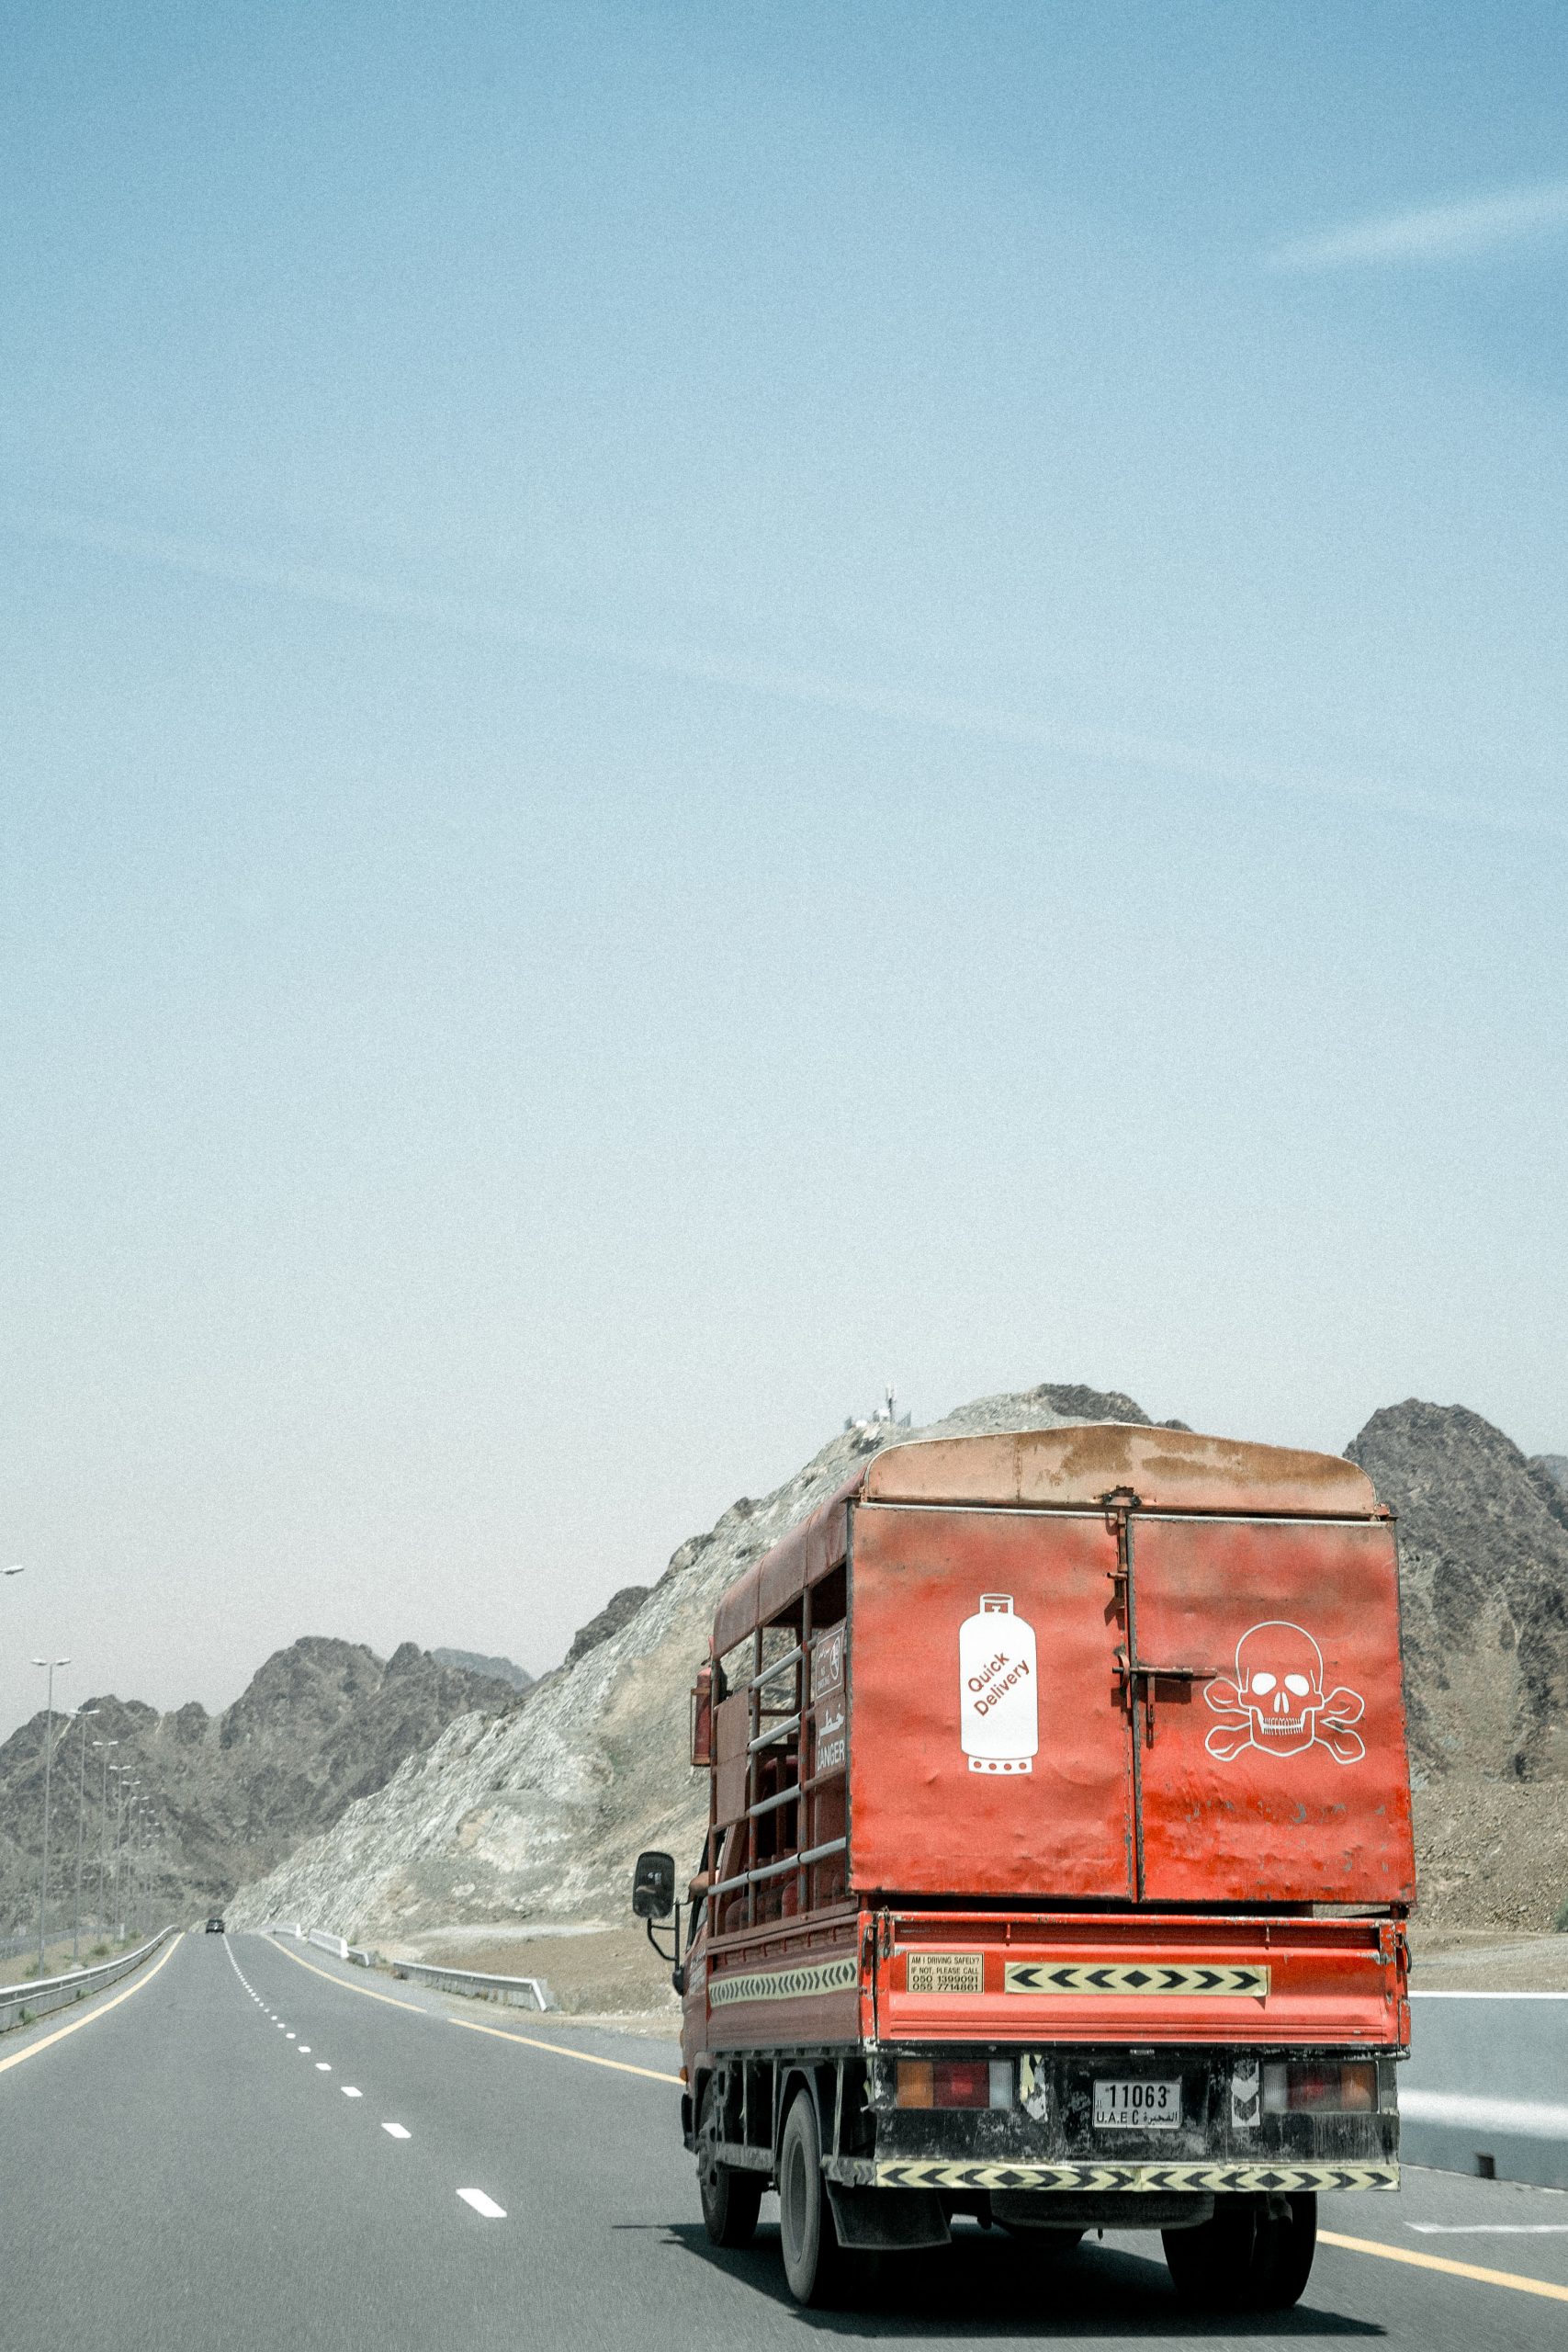 Gas transporter in Dubai